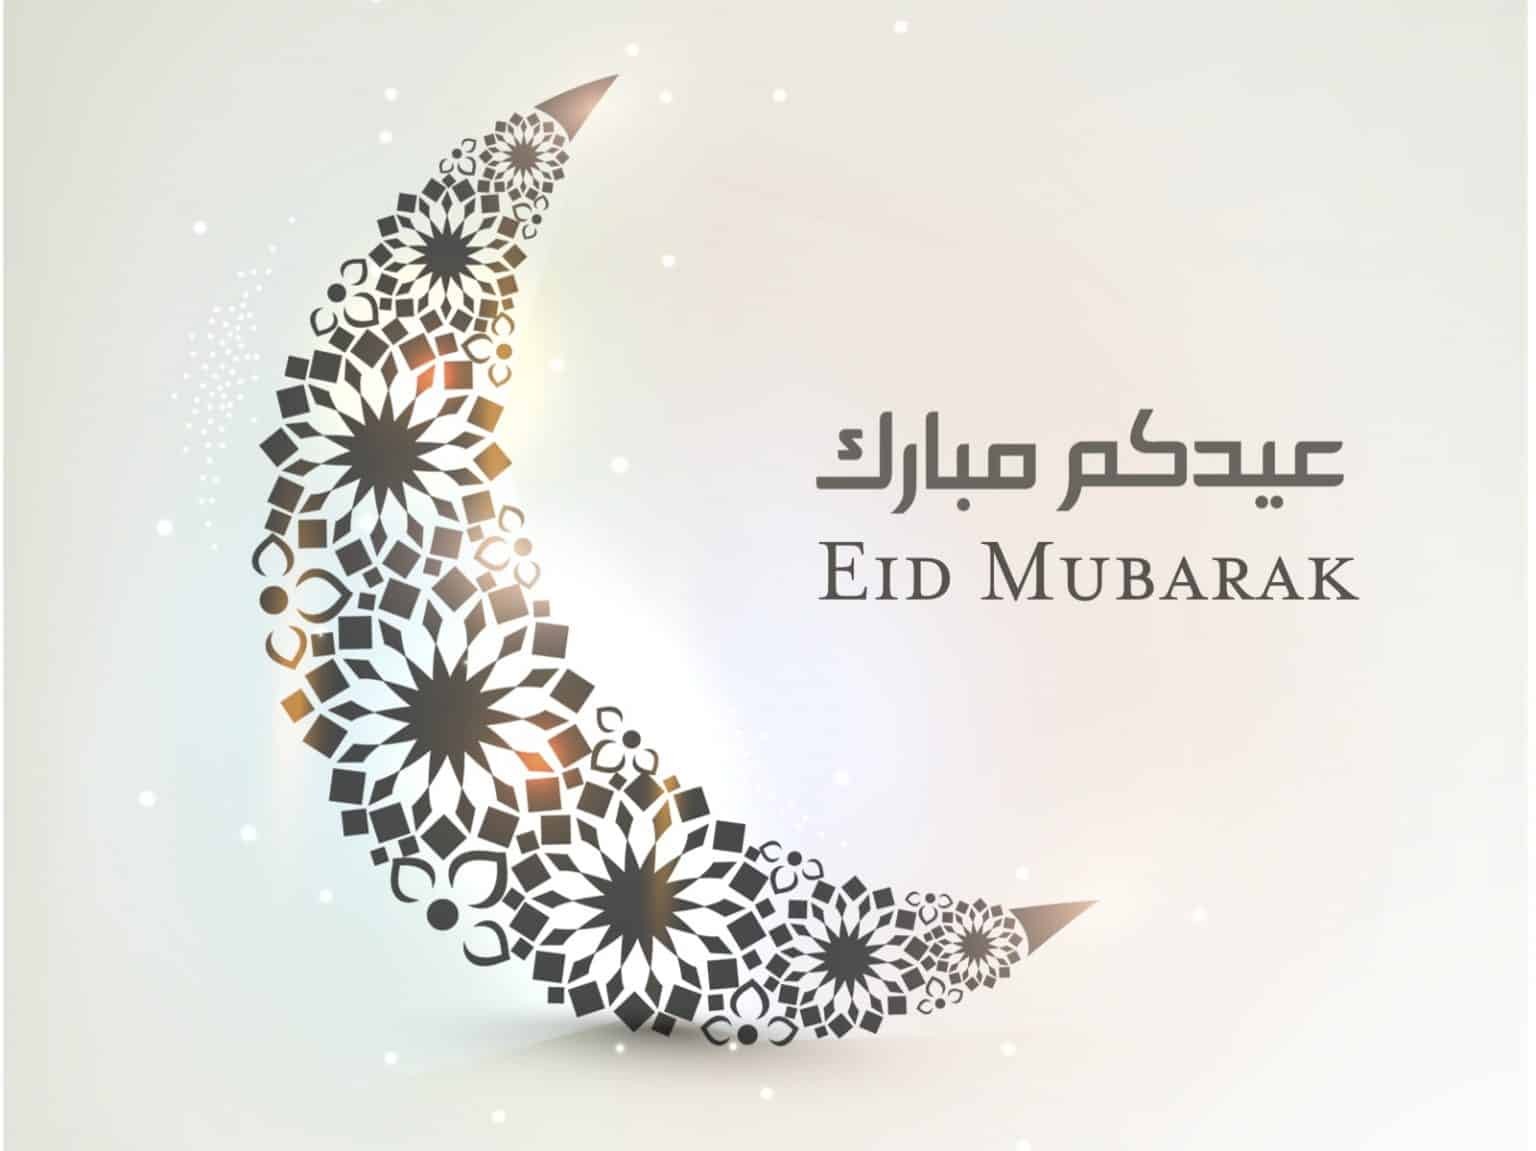 Happy-Eid-Mubarak-2015-Images-1536x1151.jpg